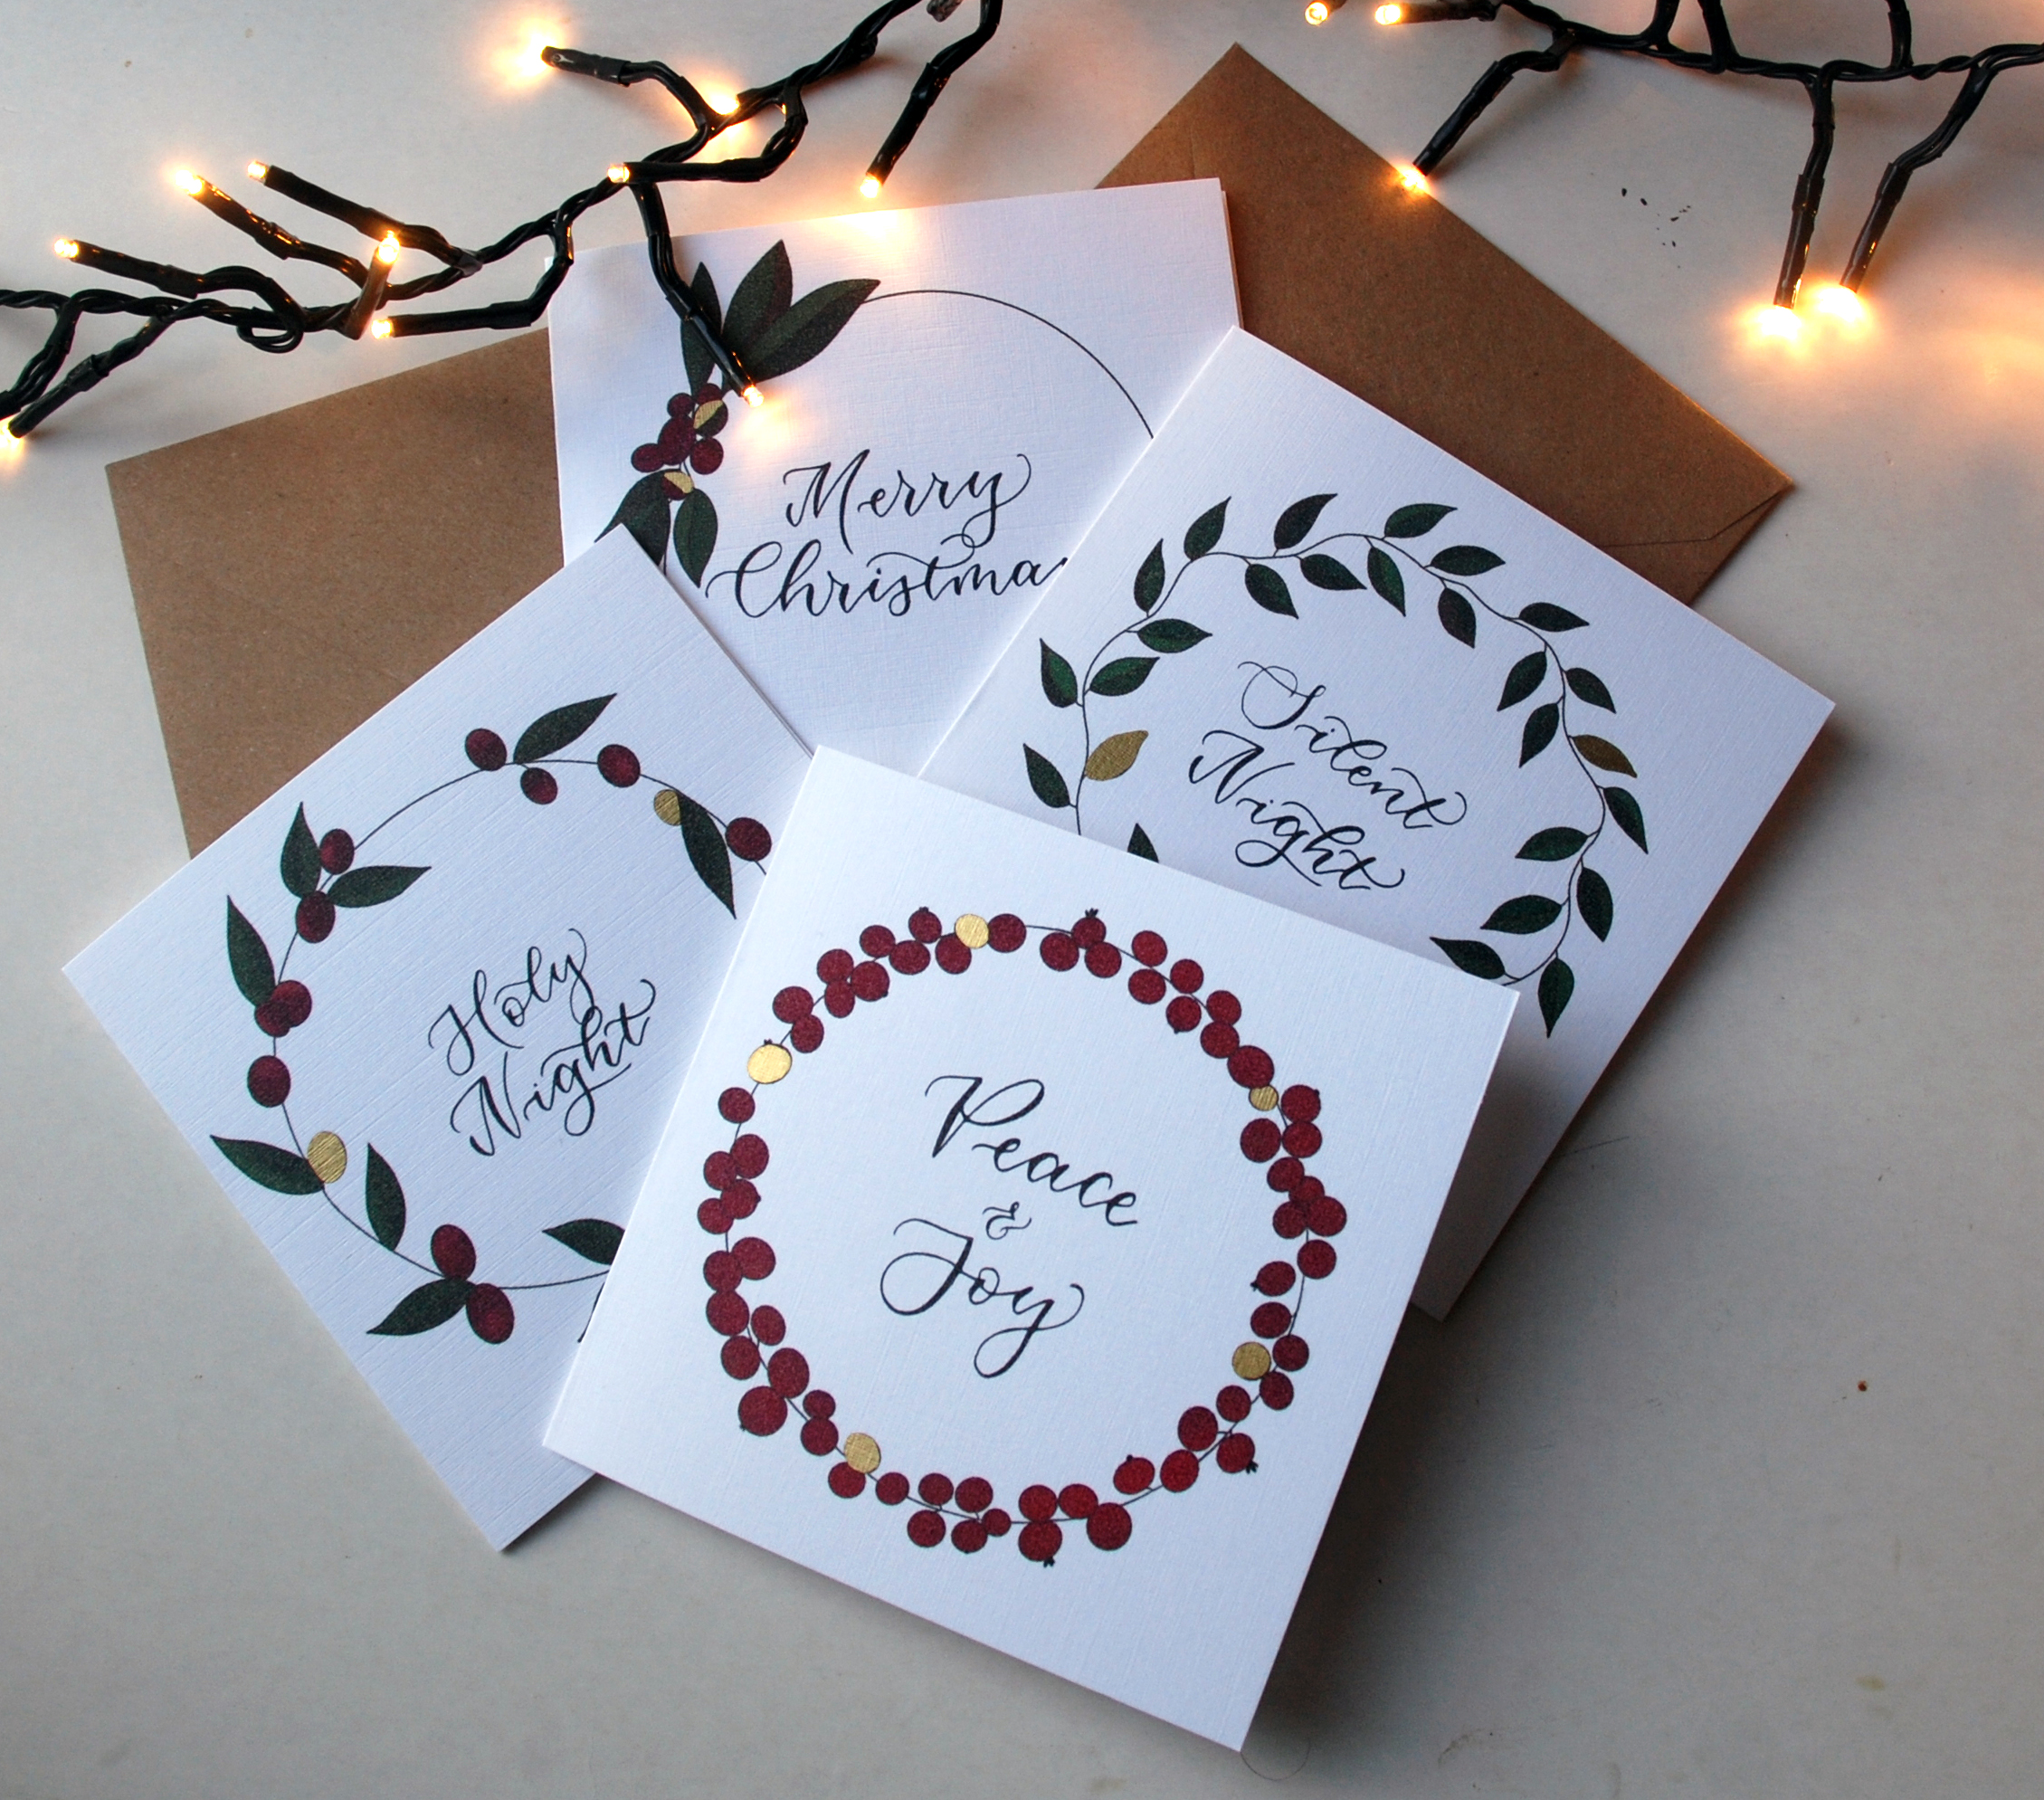 Festive wreath and foliage Christmas cards